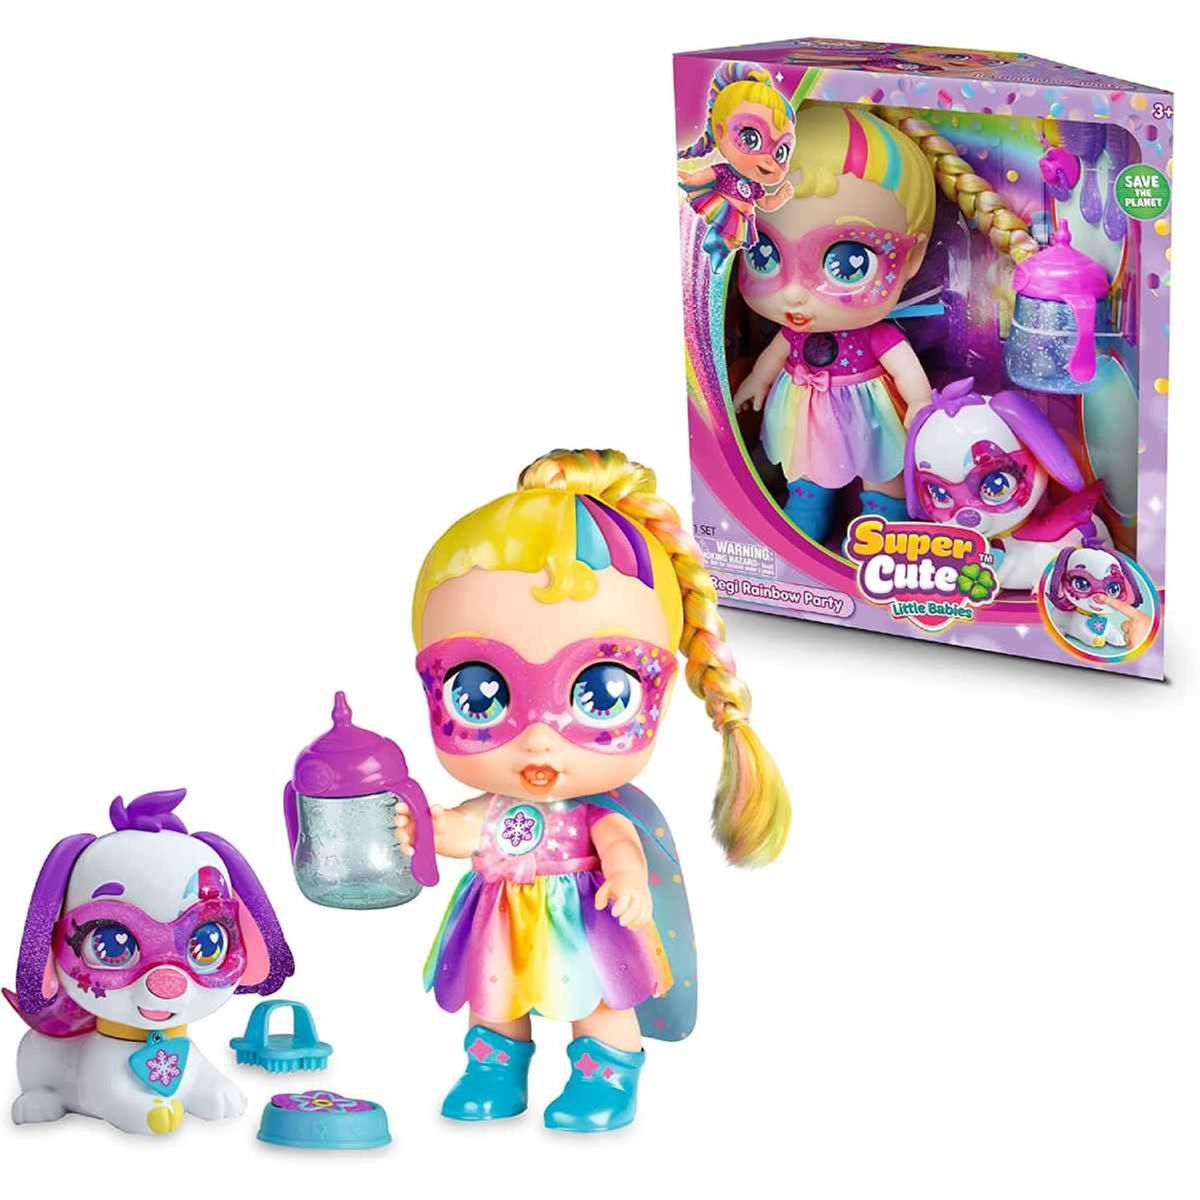 Super Cute Little Babies - Rainbow Party Doll (vários modelos